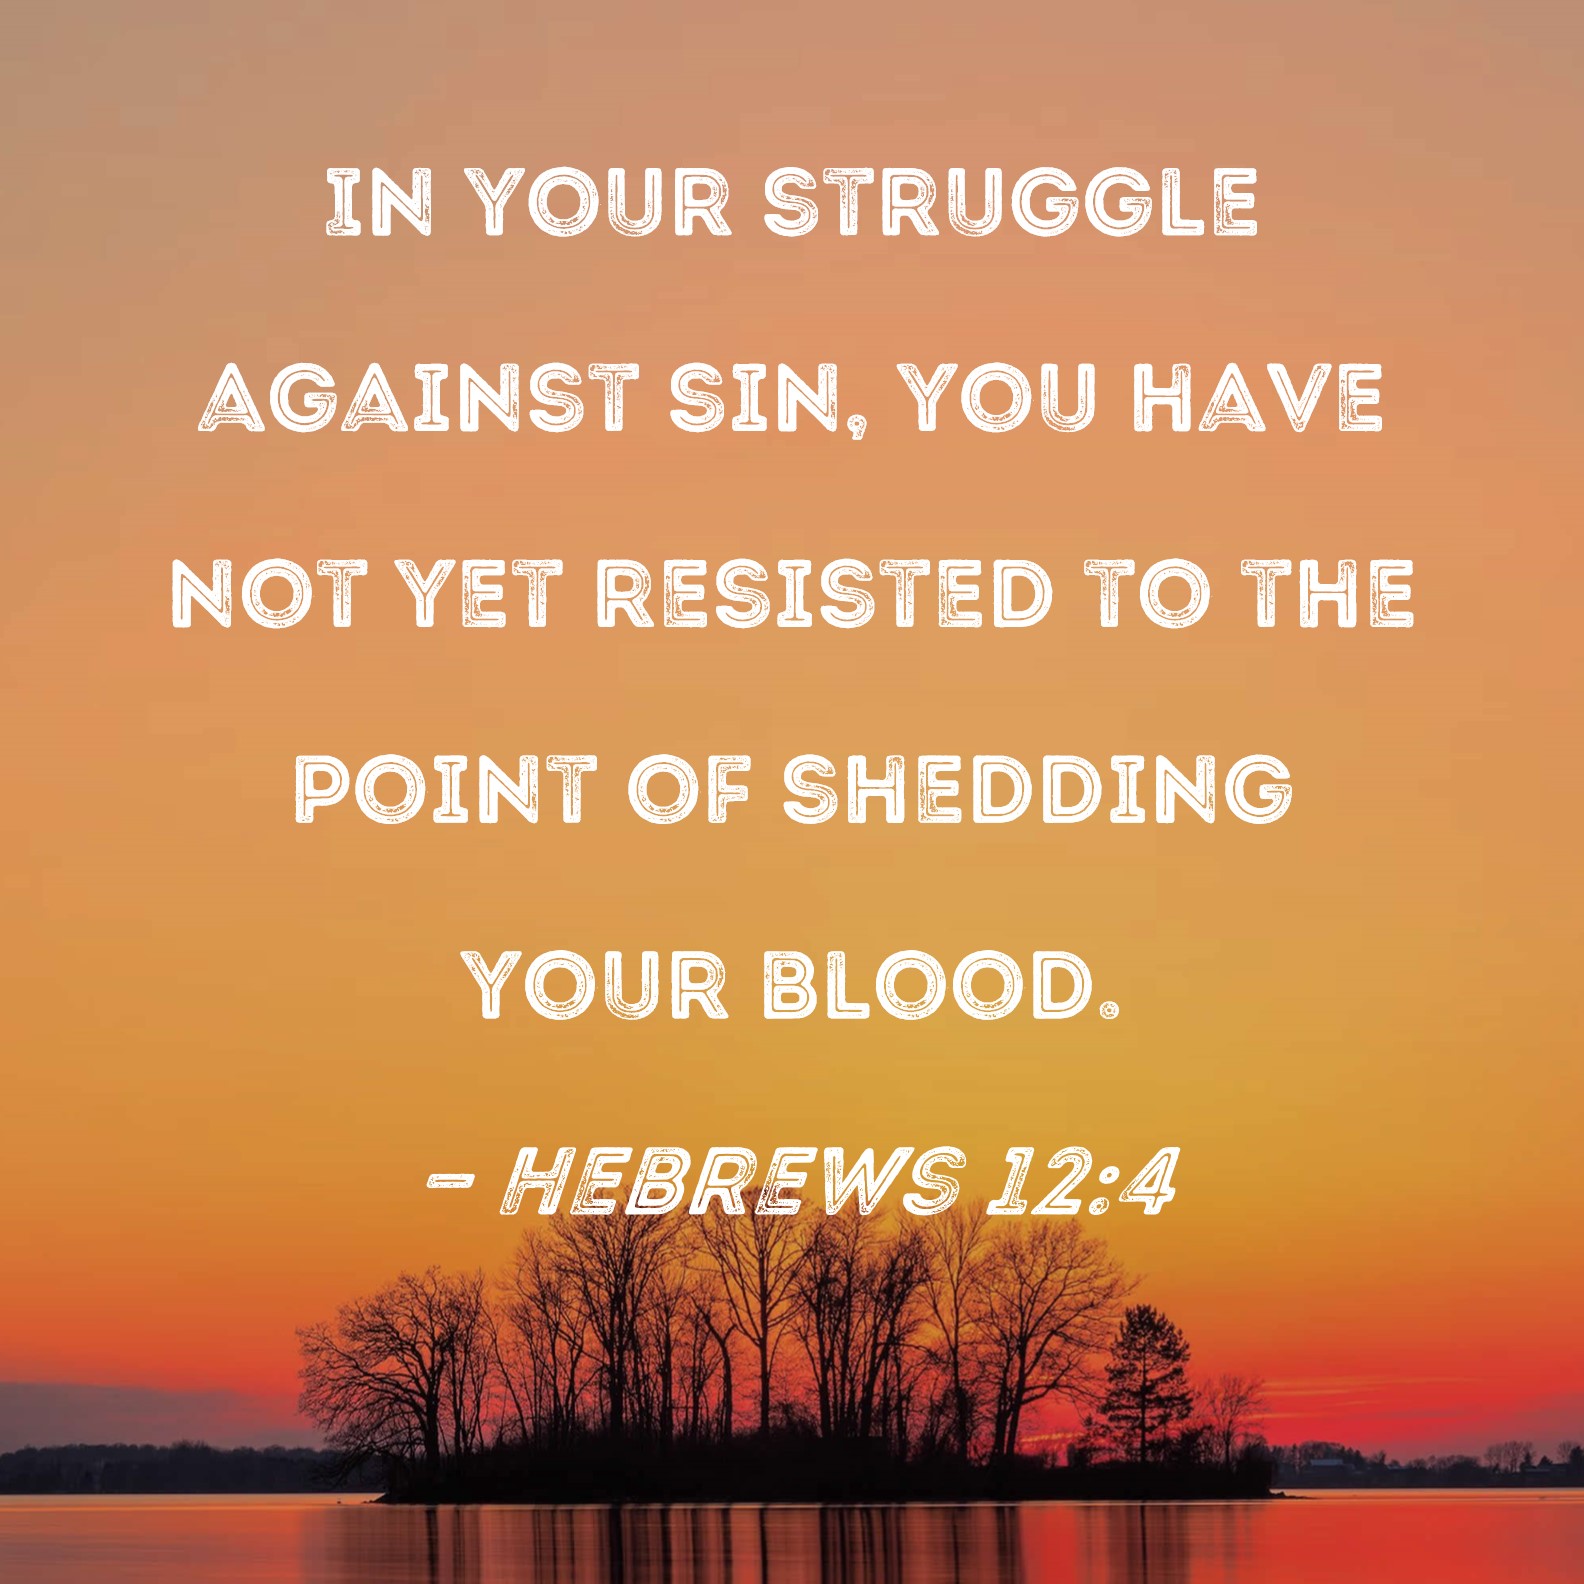 bible verses on struggles